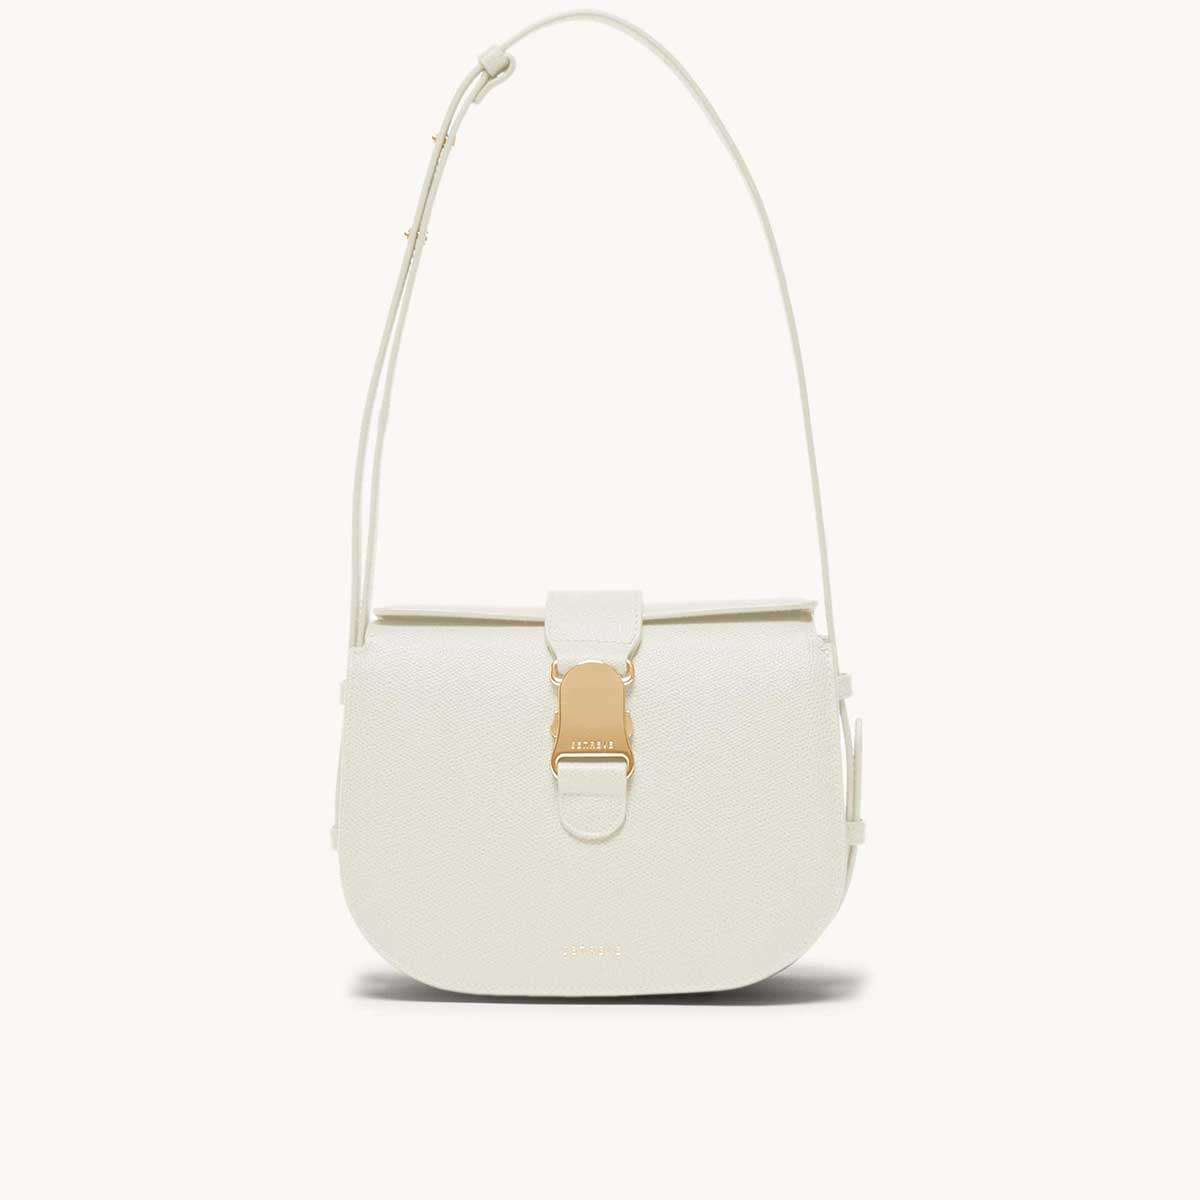 V+BENIE Gold Button Crossbody Shoulder Bag with Adjustable Chain Strap Small Medium Purse Handbags for Women 